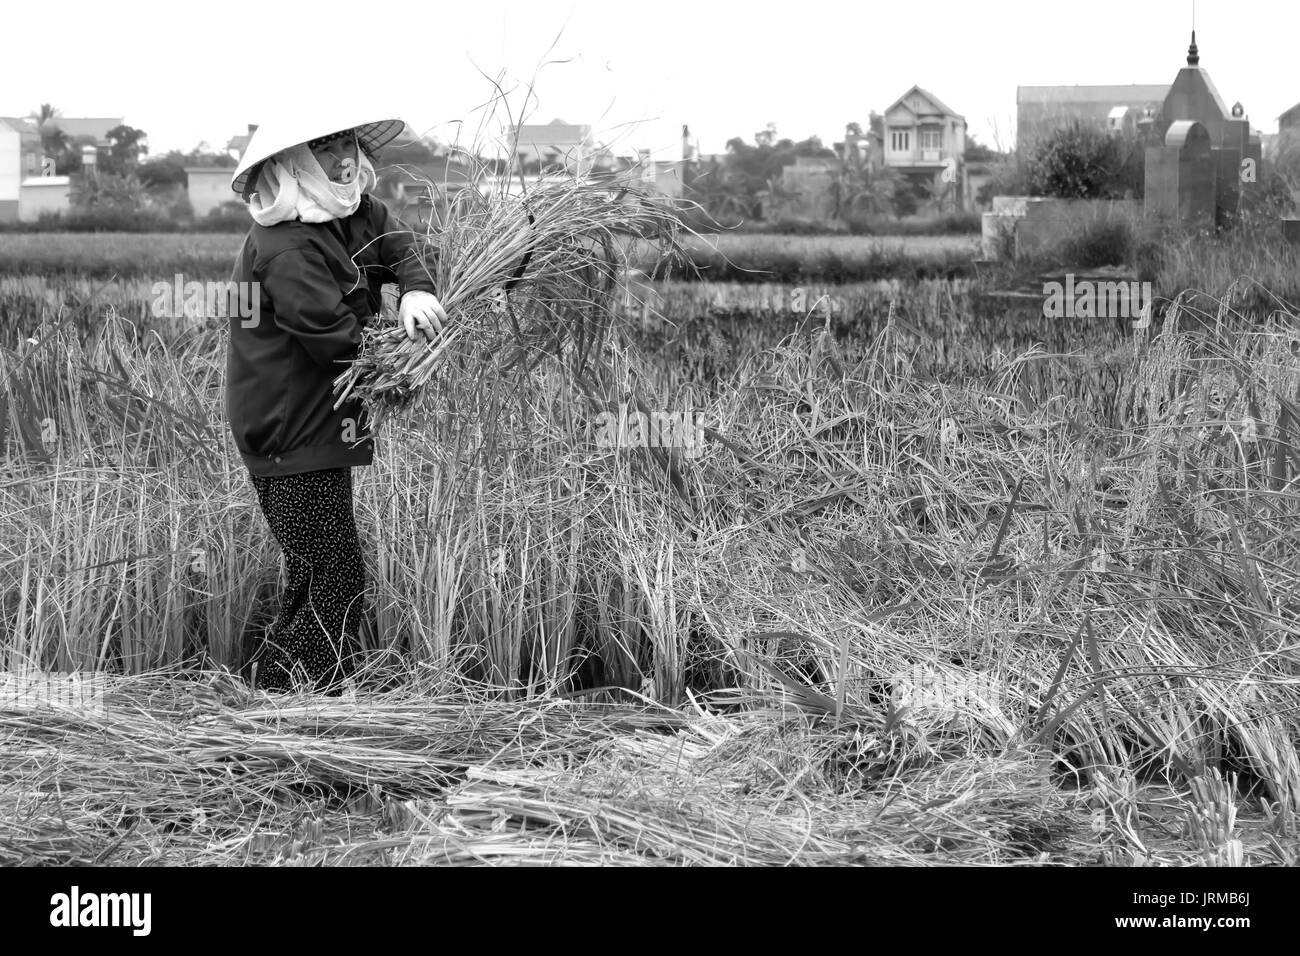 HAI DUONG, VIETNAM, November, 6: Vietnamesische Bäuerin Ernte auf einem Reisfeld am 6. November 2013 in Hai Duong, Red River Delta, Vietnam. Reis Kult Stockfoto